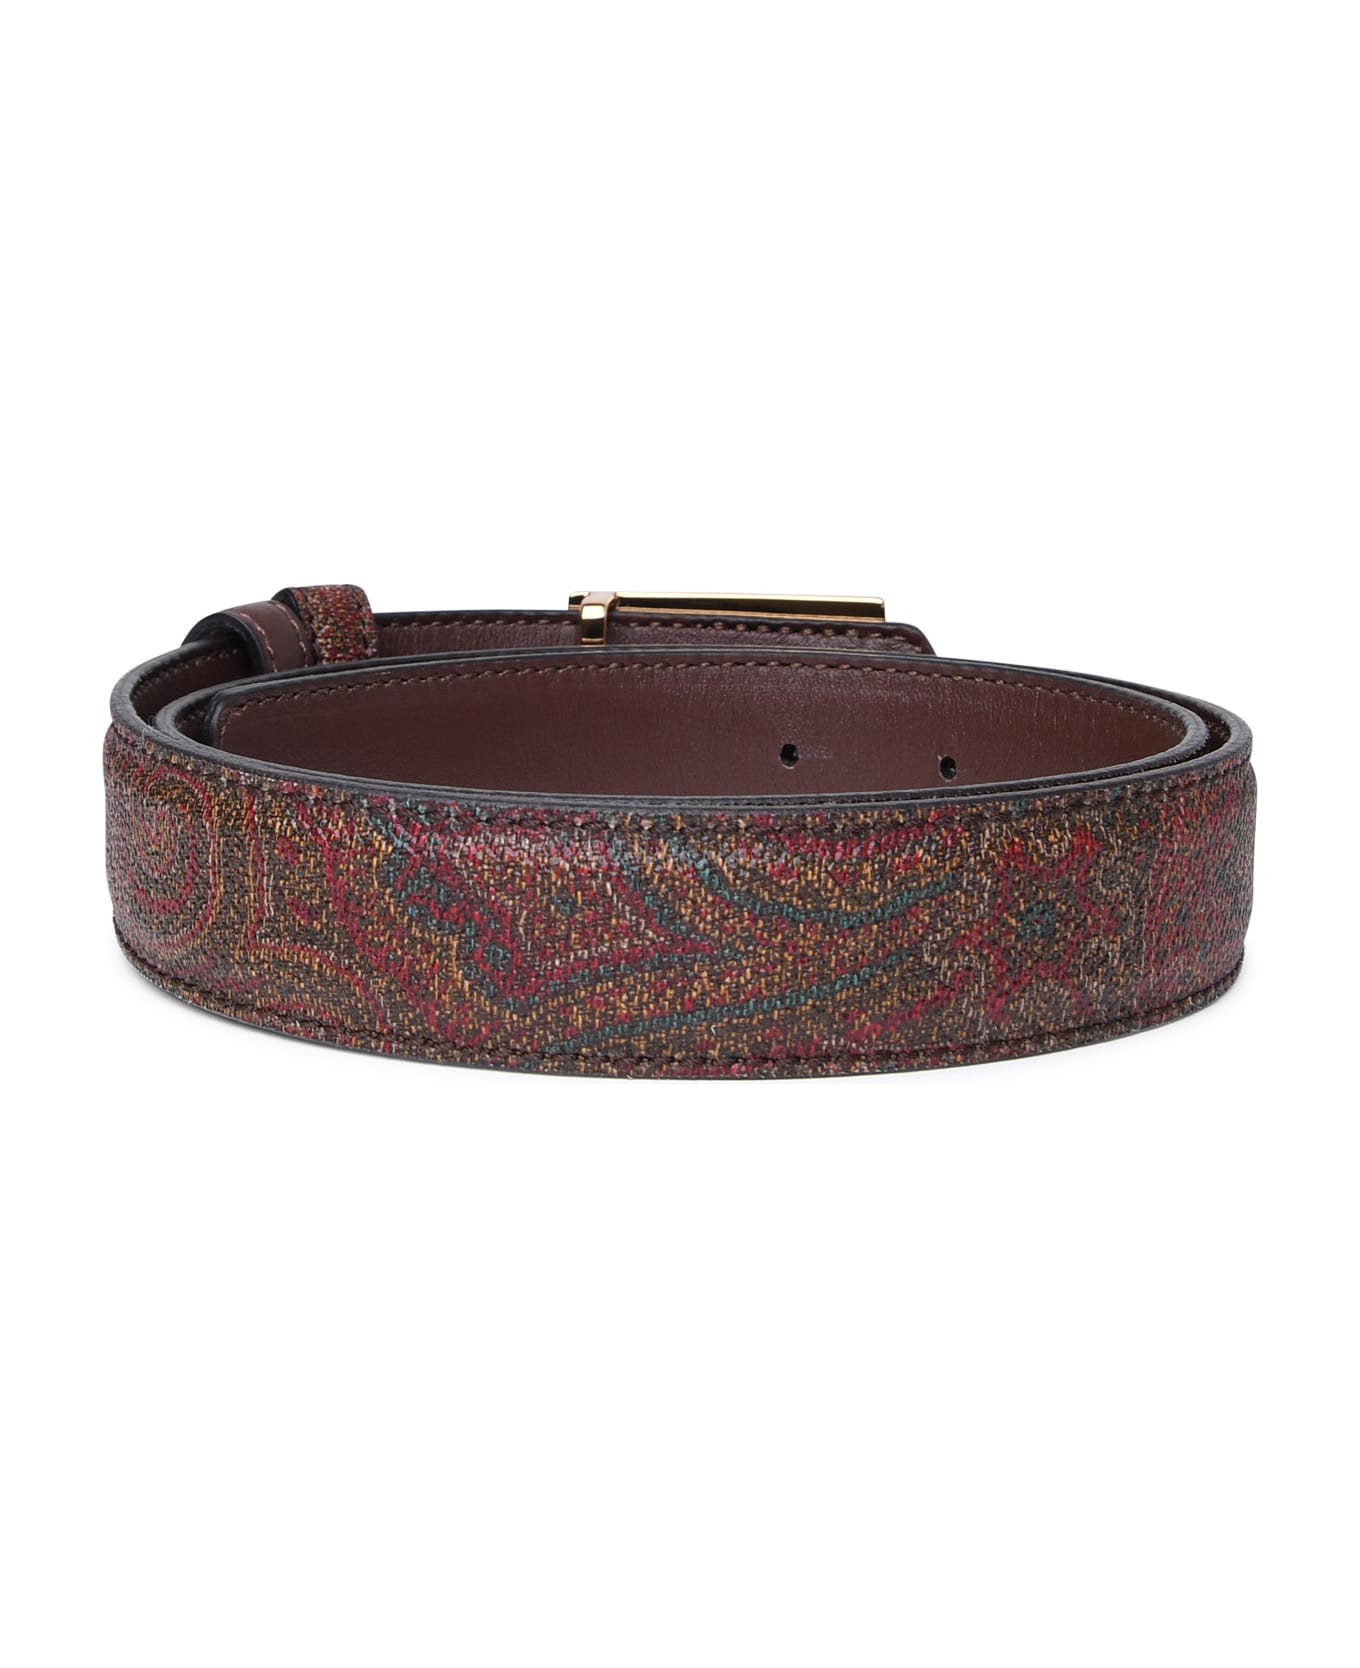 Etro Brown Leather Belt - Brown